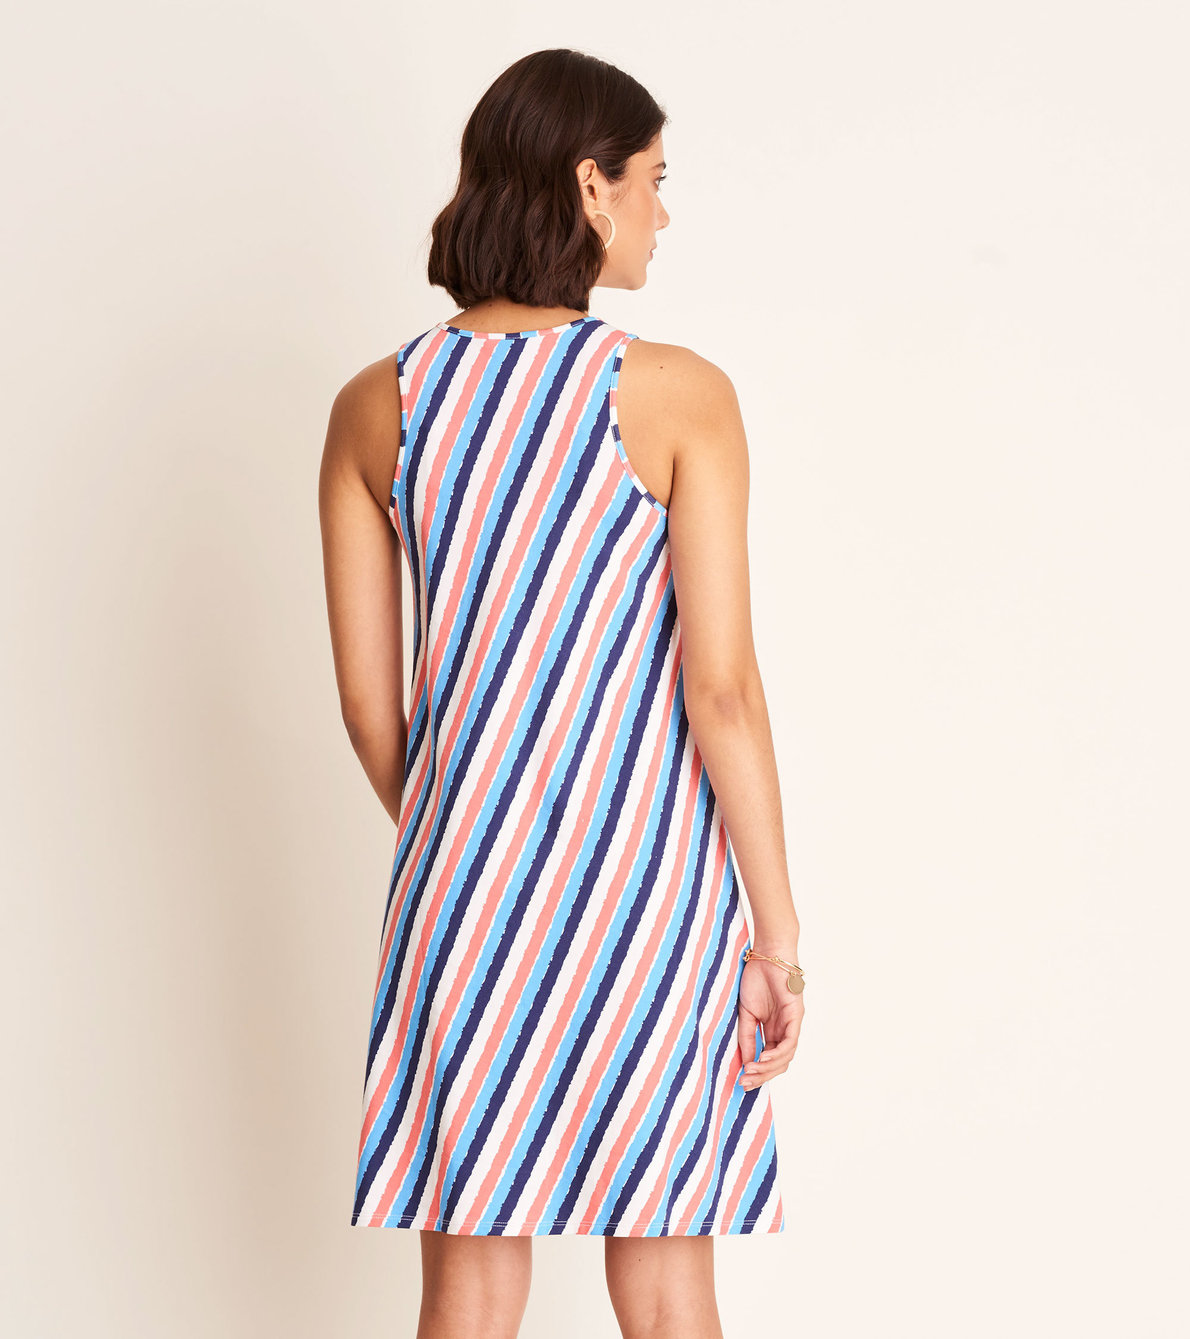 View larger image of Bella Tank Dress - Diagonal Stripes